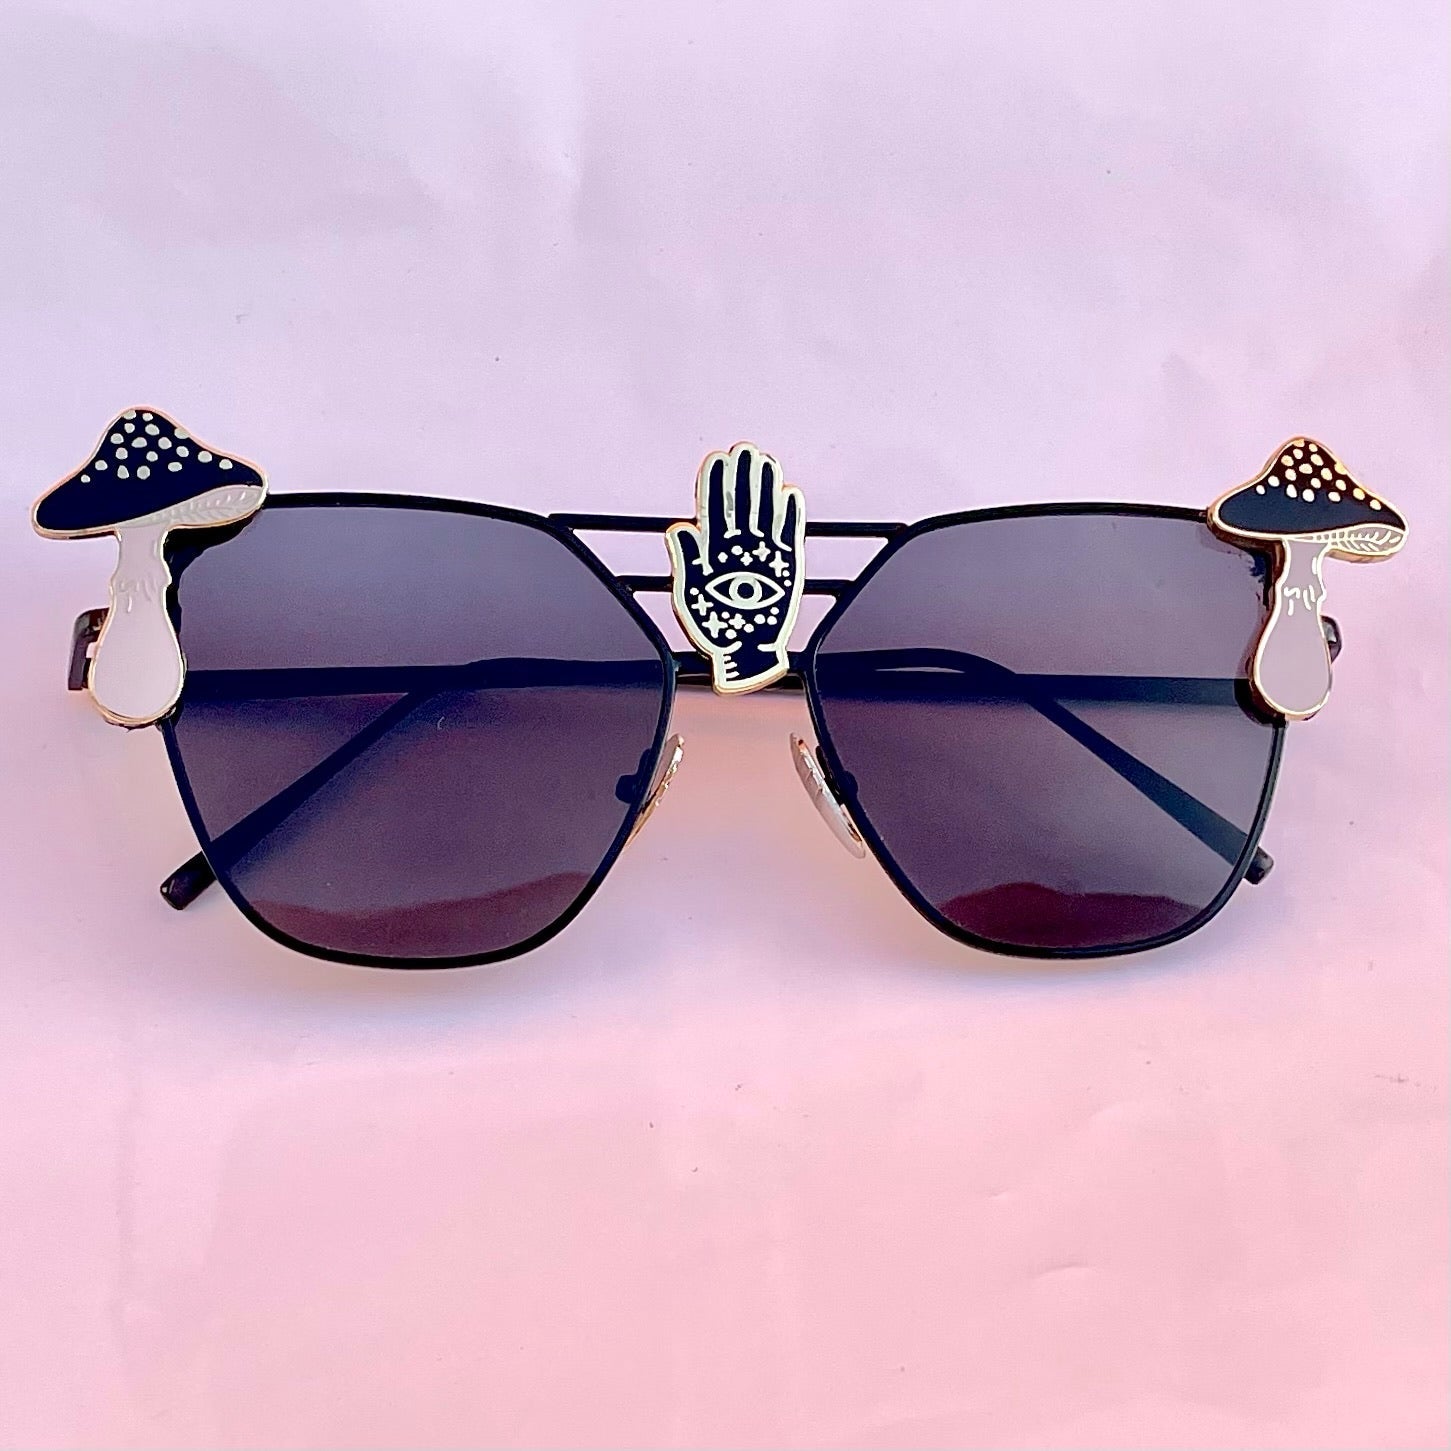 Louis Vuitton Sunglasses Price in pakistan 2020